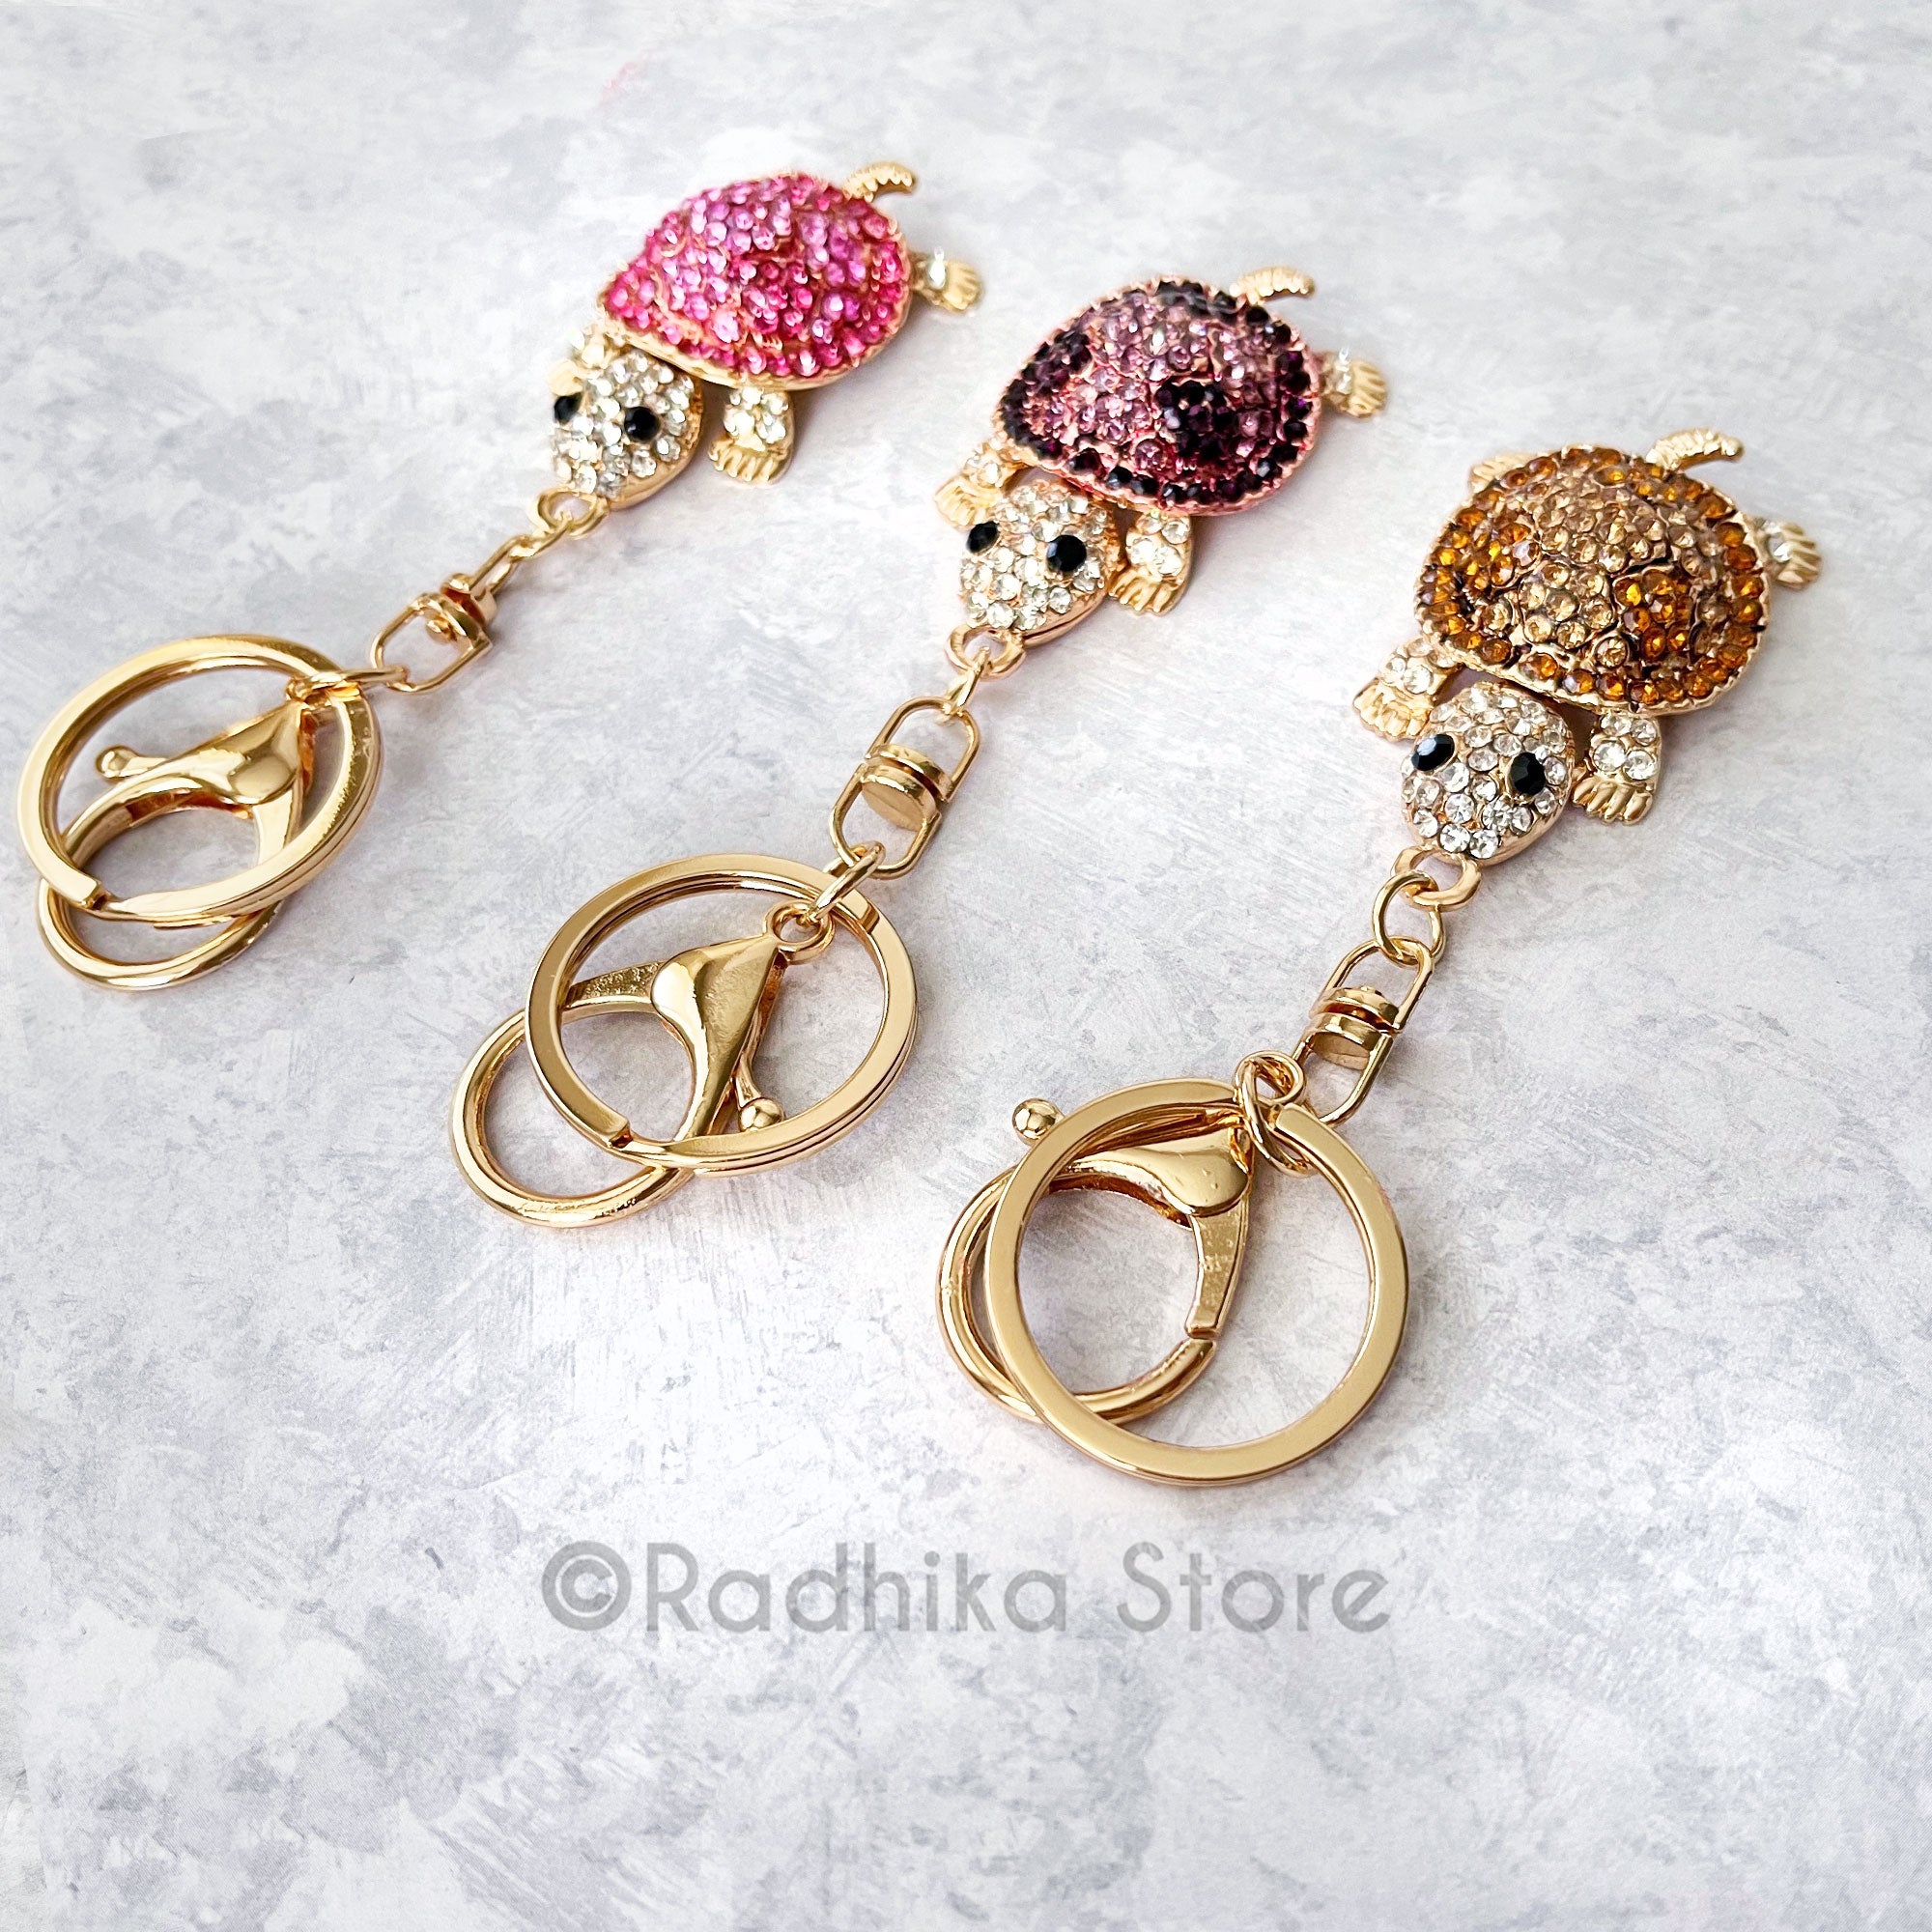 Radha Kund Turtle-Key Chains- Choose Color